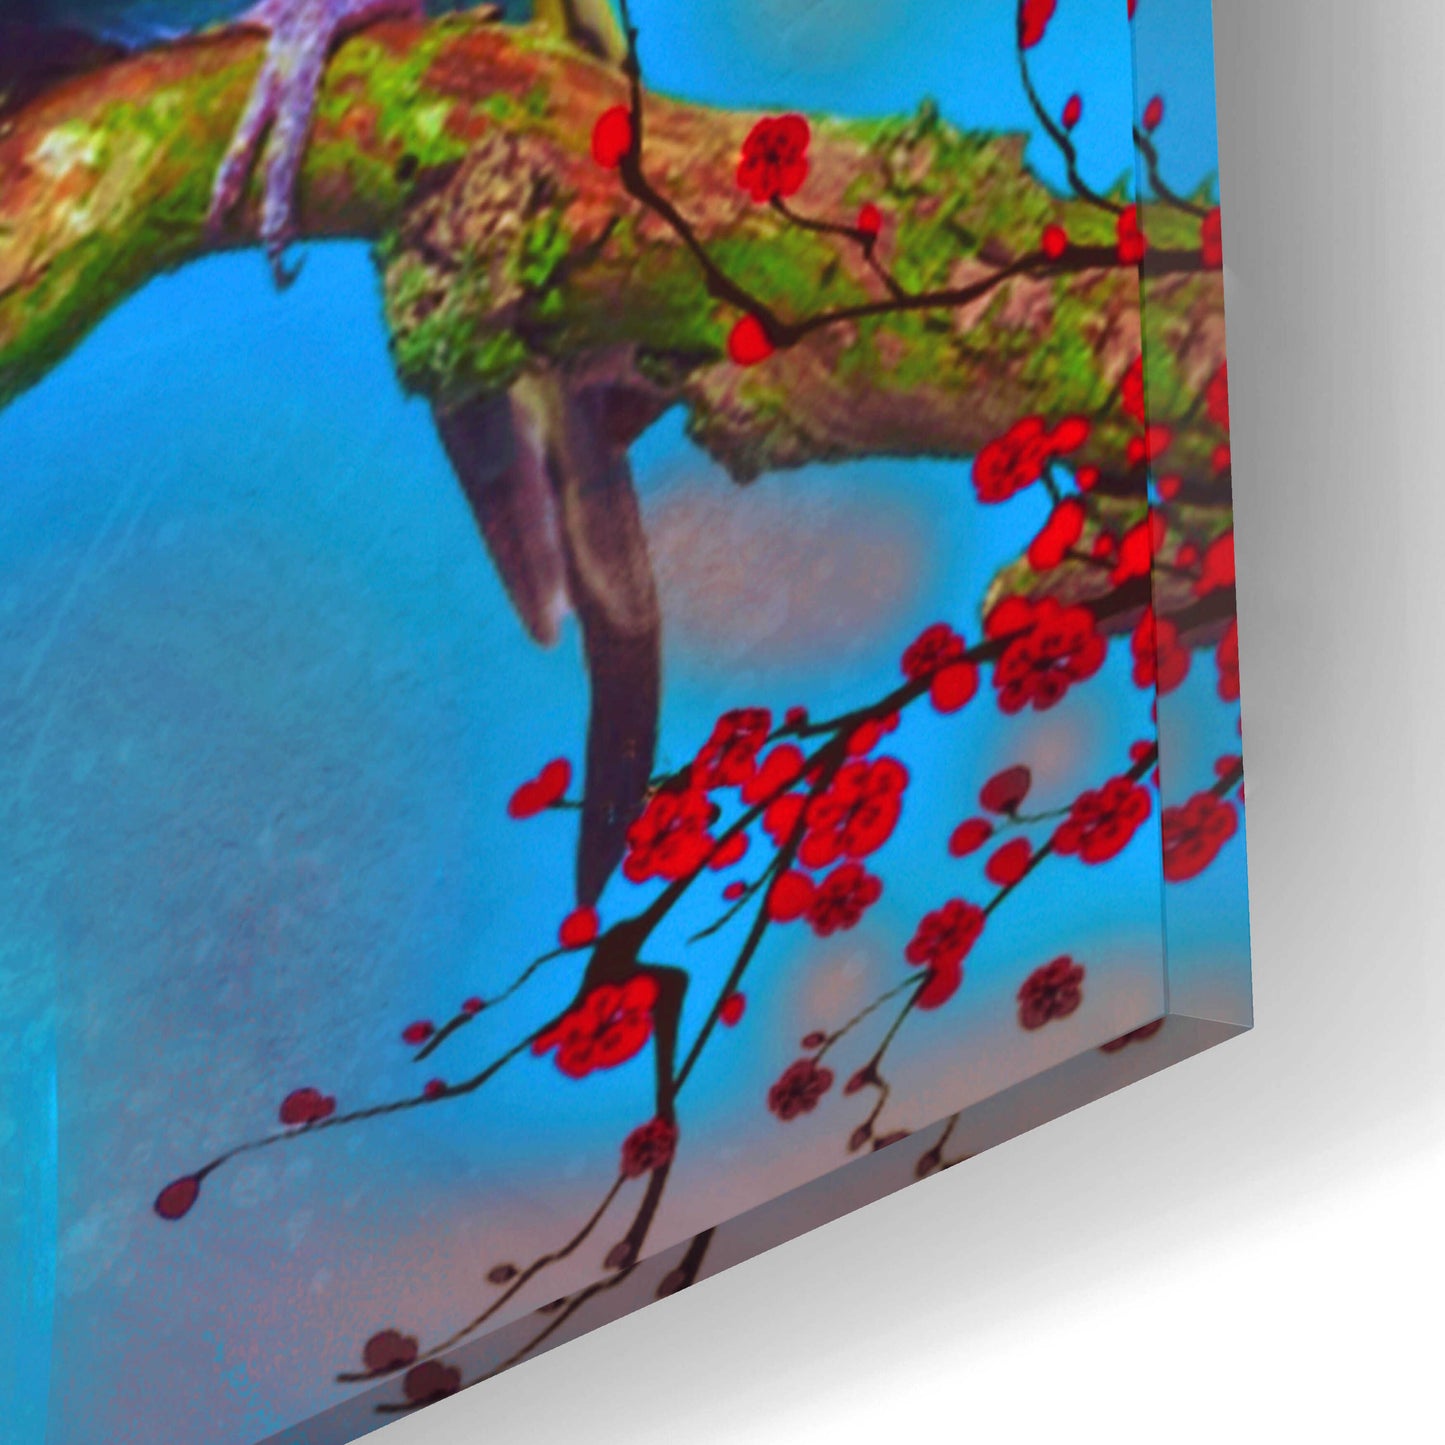 Epic Art 'Color Birds' by Ata Alishahi, Acrylic Glass Wall Art,16x12